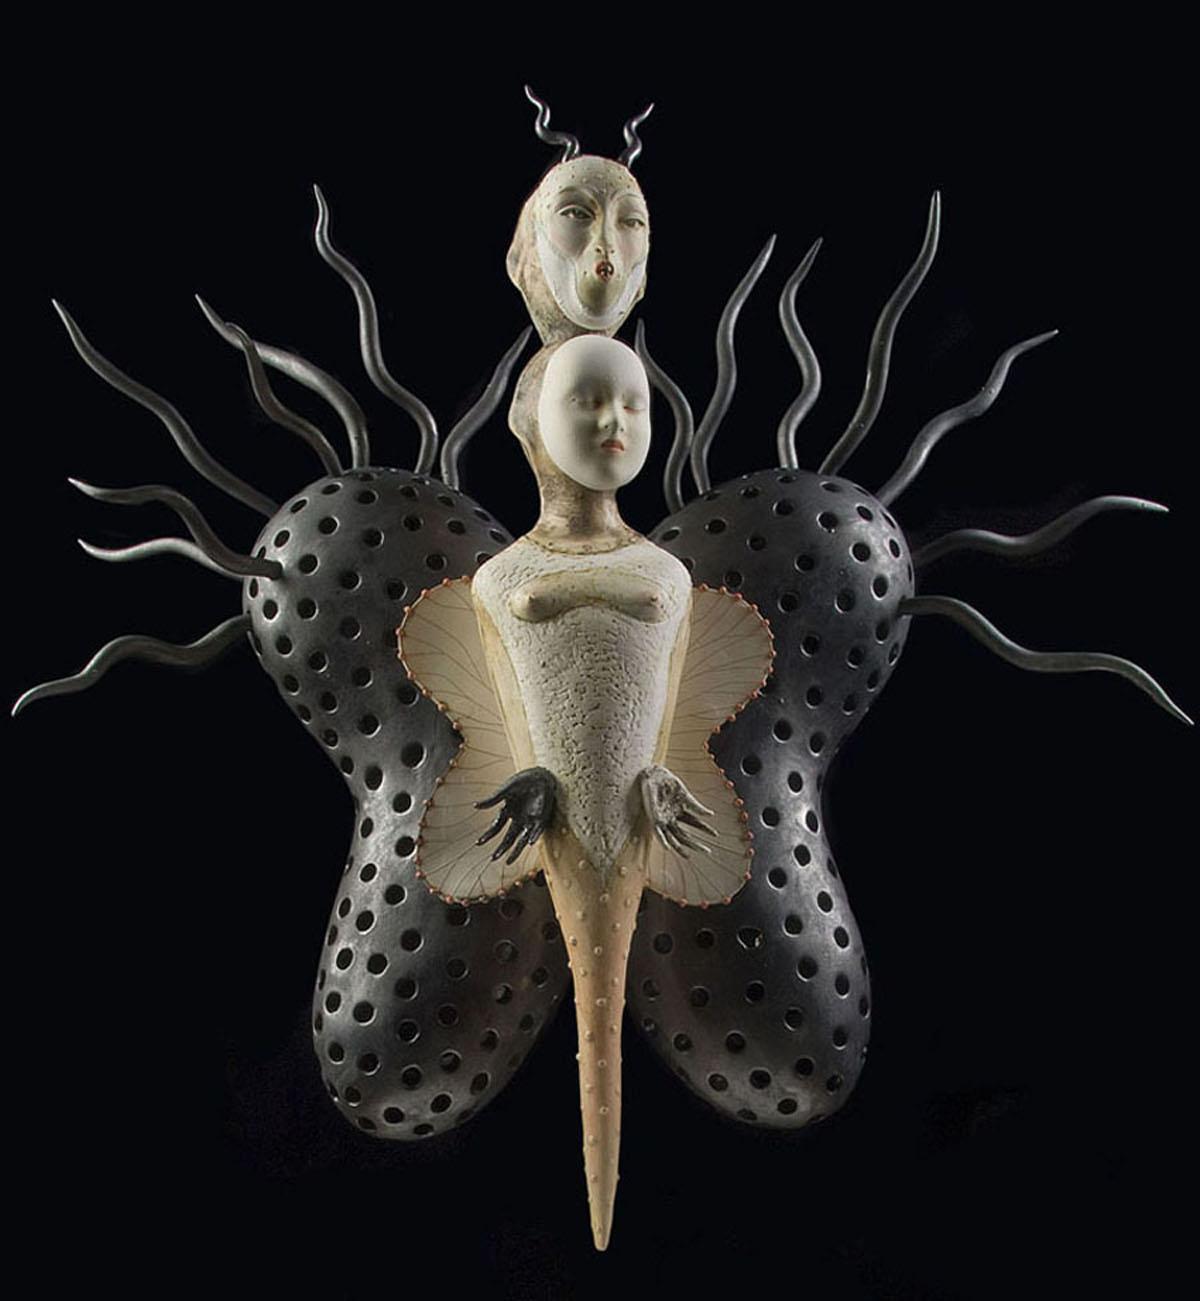 Lisa Clague – Sculptures Light and Darkness